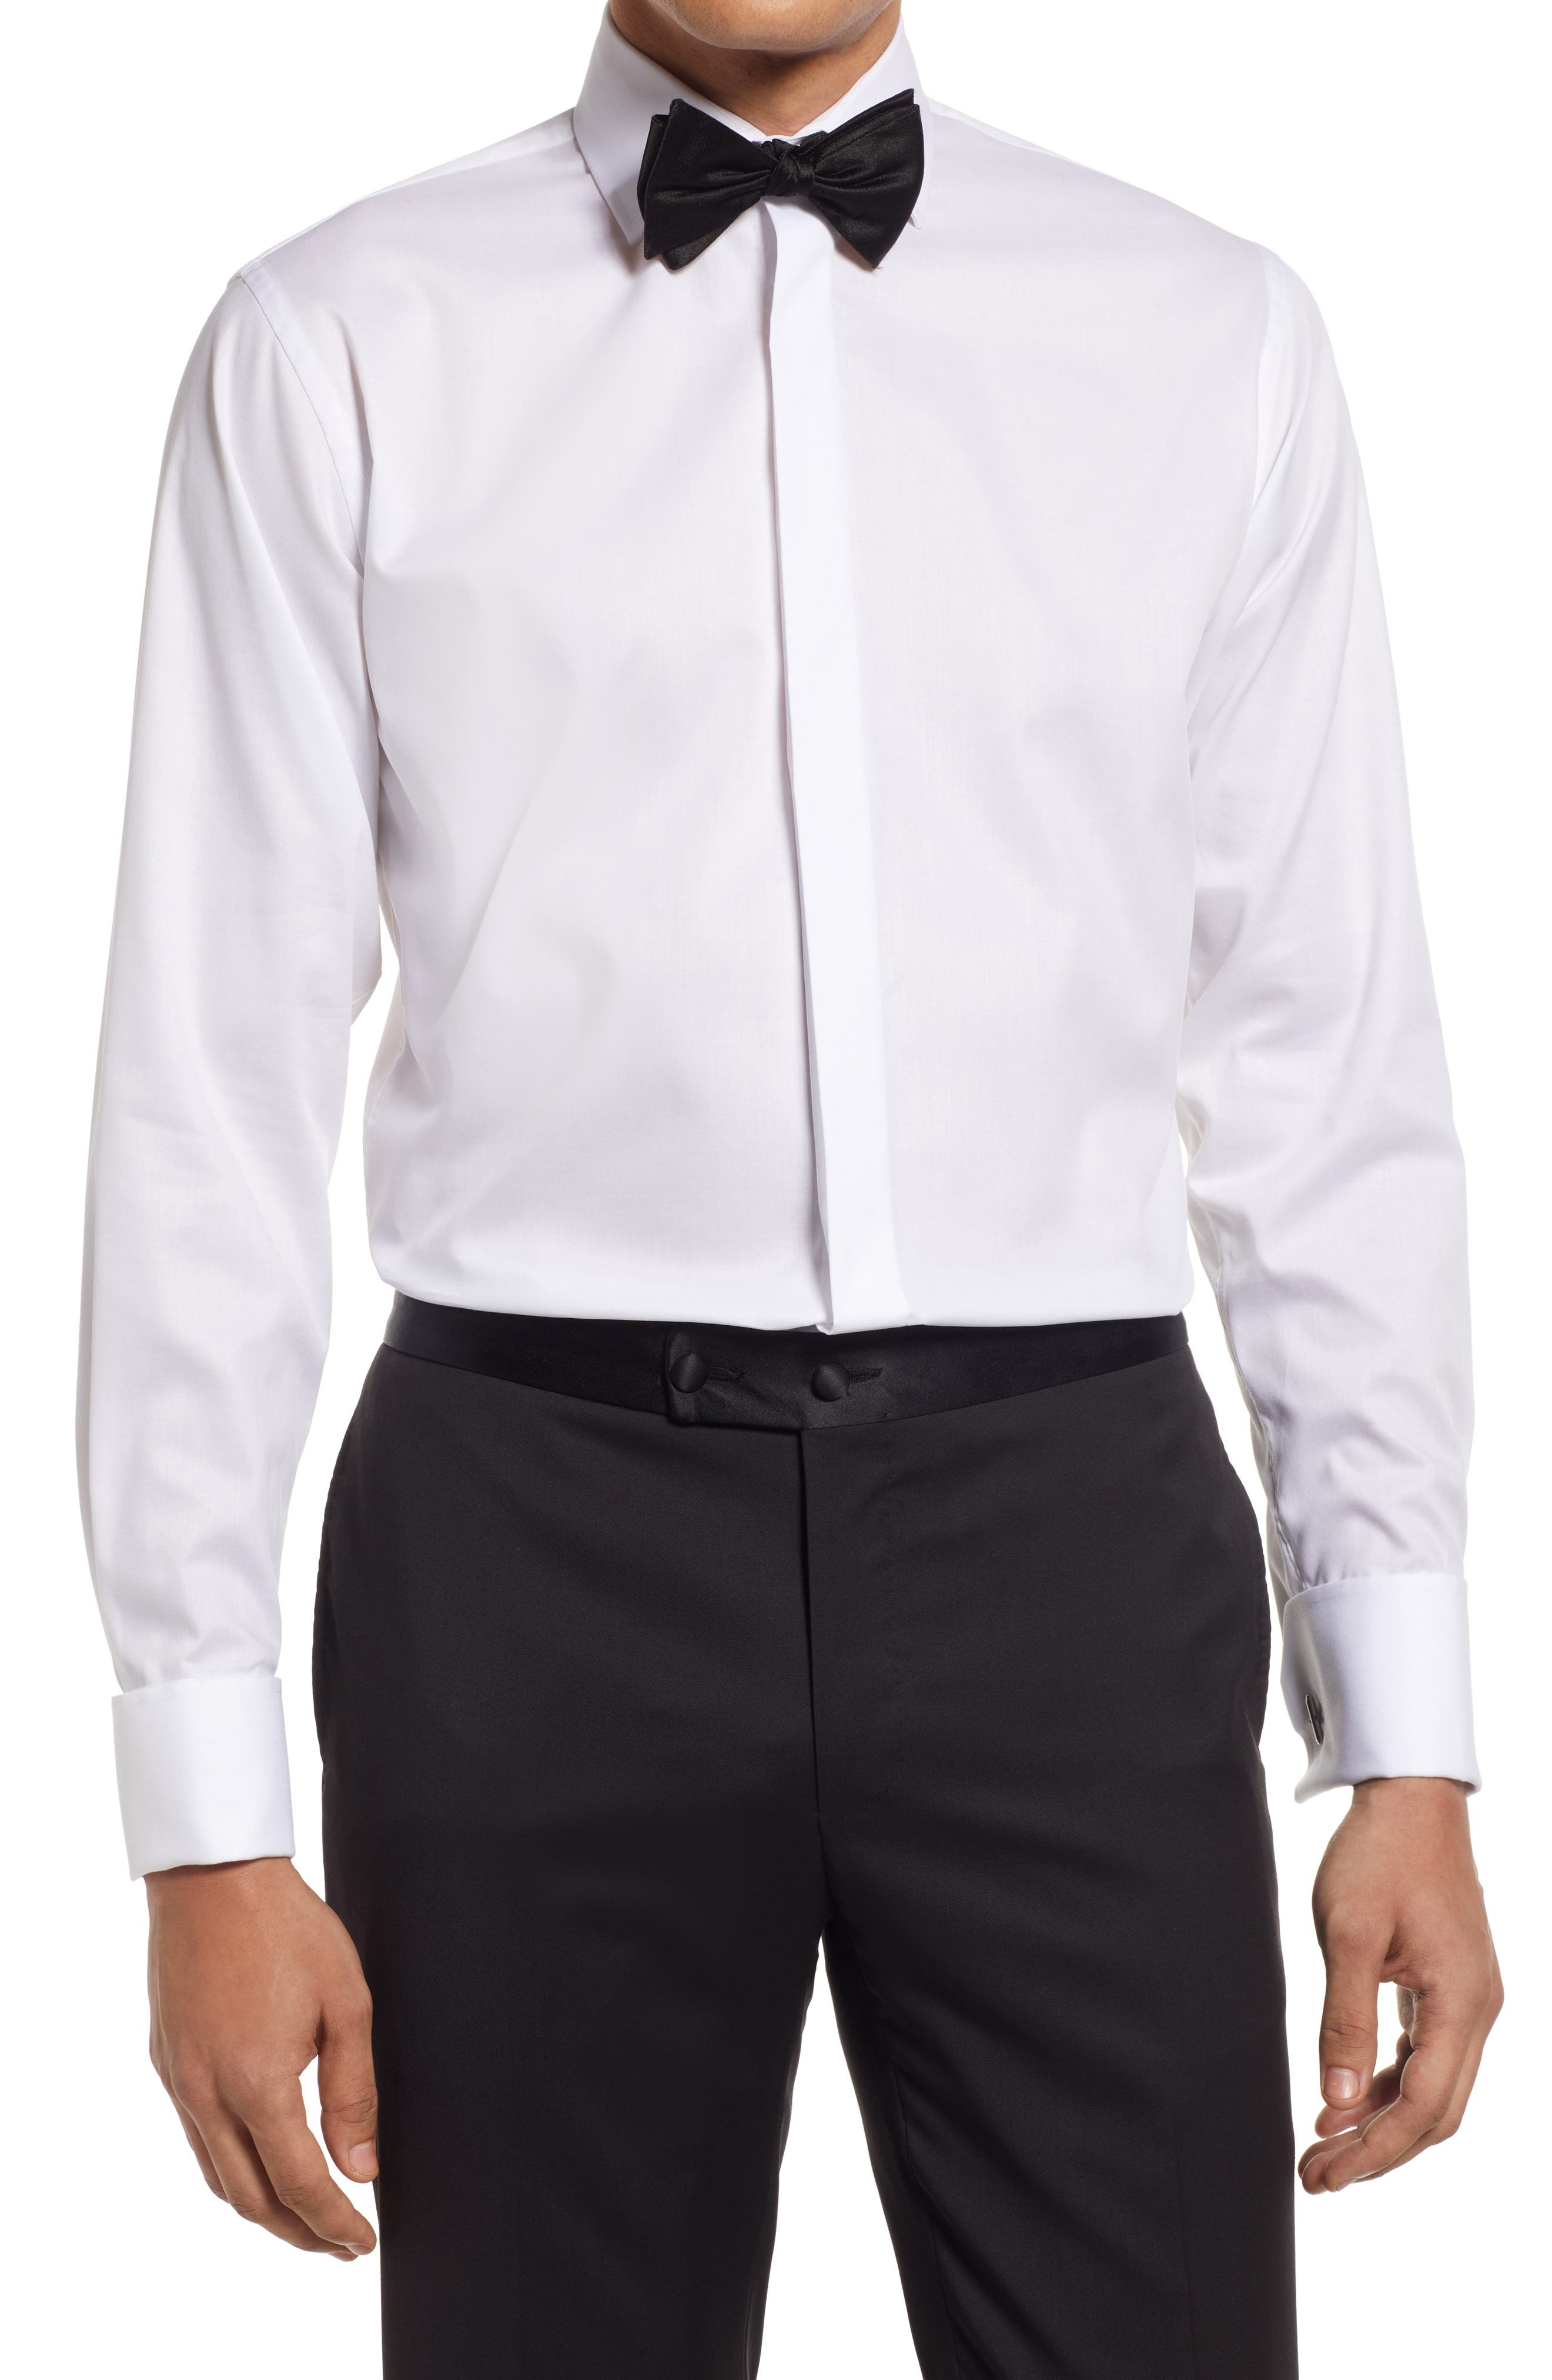 Alton Lane Sullivan Tuxedo Dress Shirt, $69 | Nordstrom | Lookastic